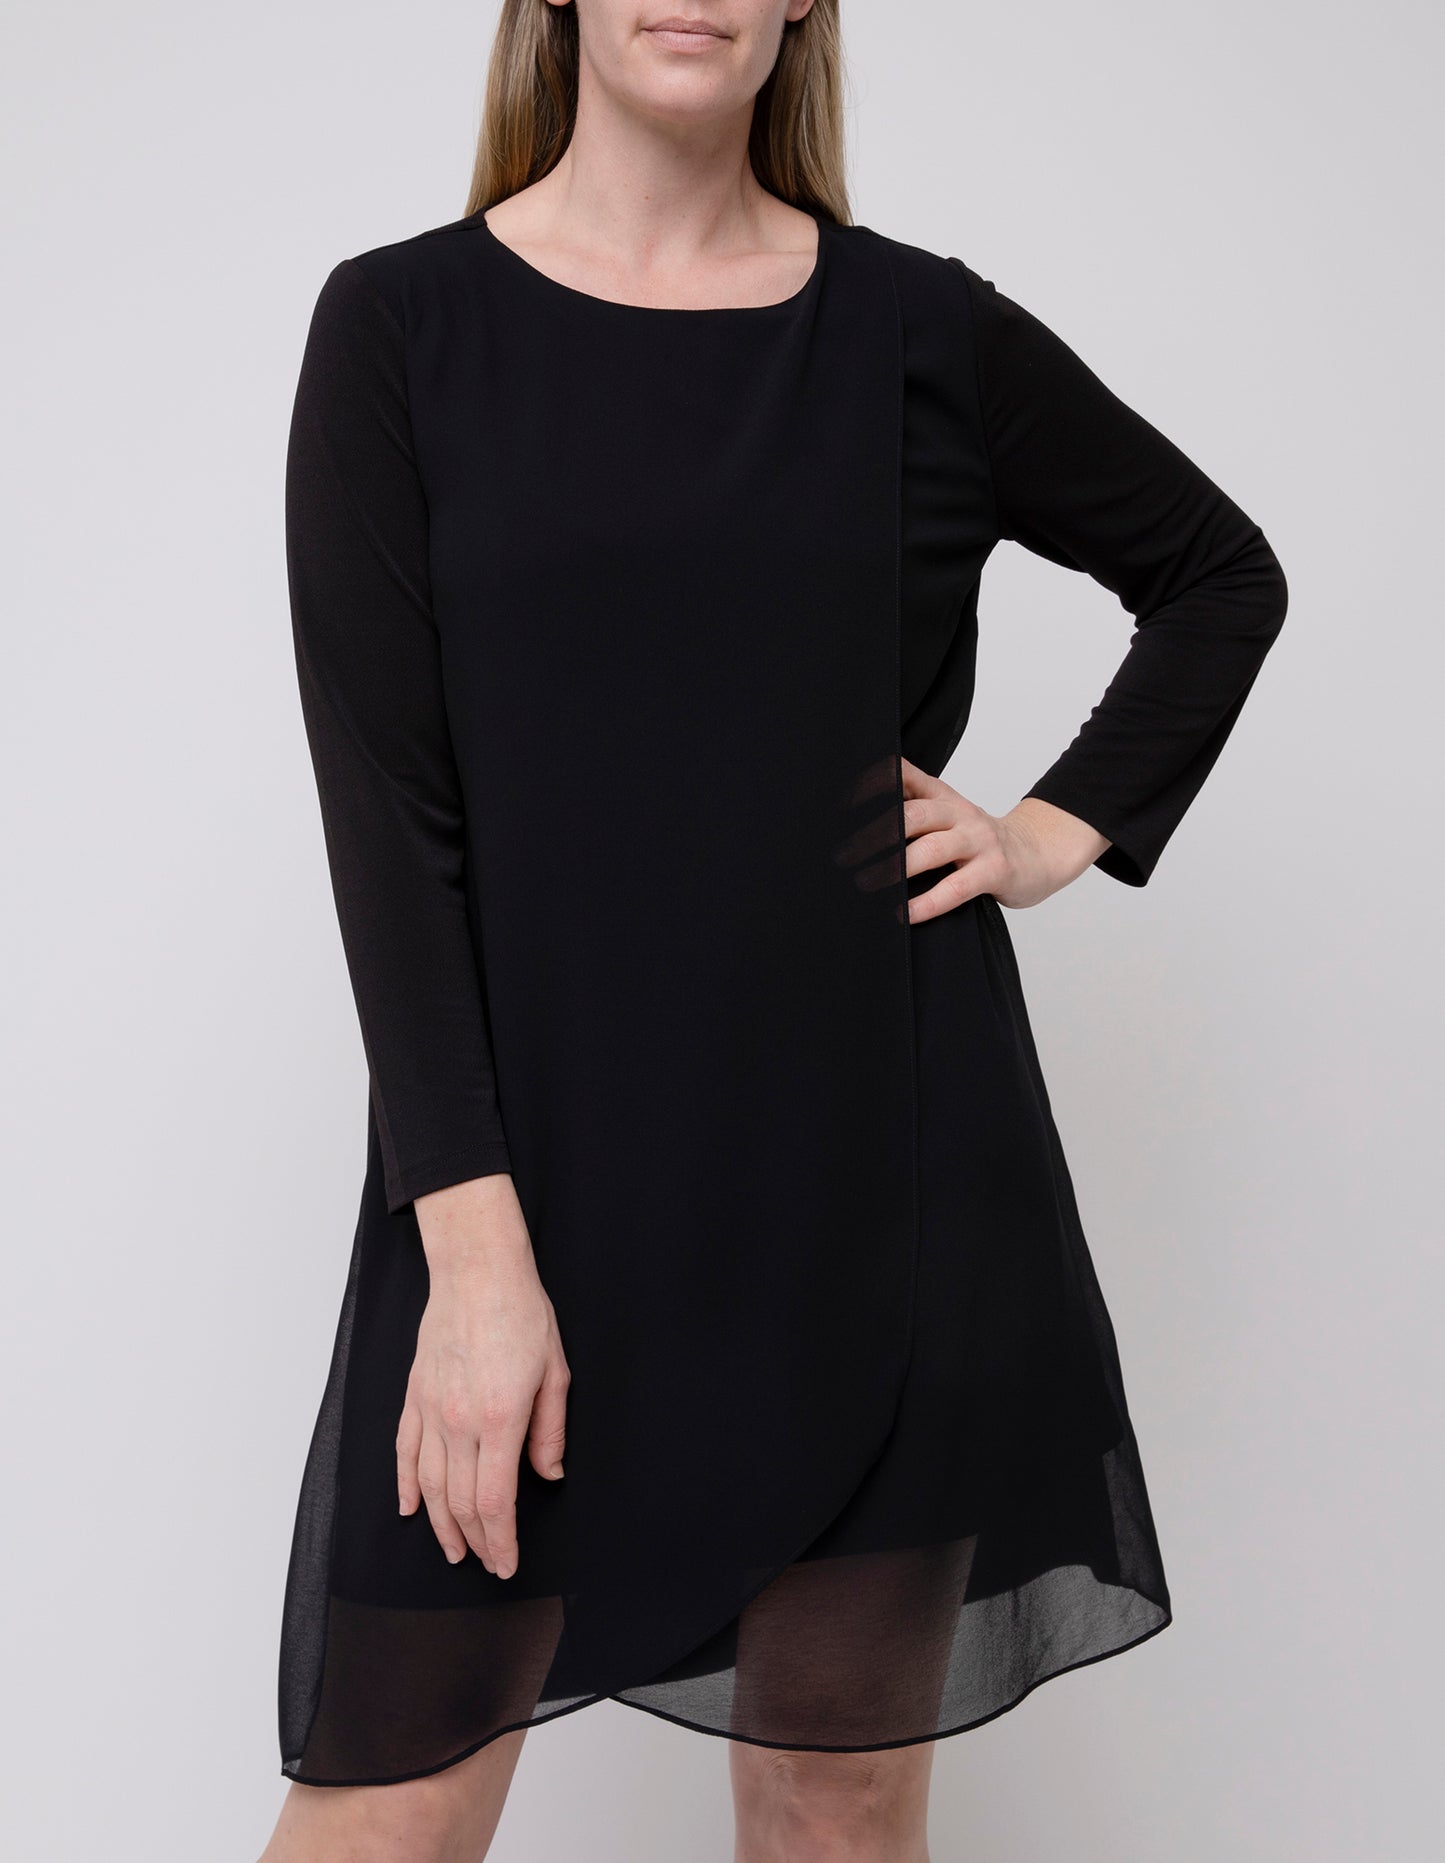 
                  
                    Layer Dress Black P545520
                  
                